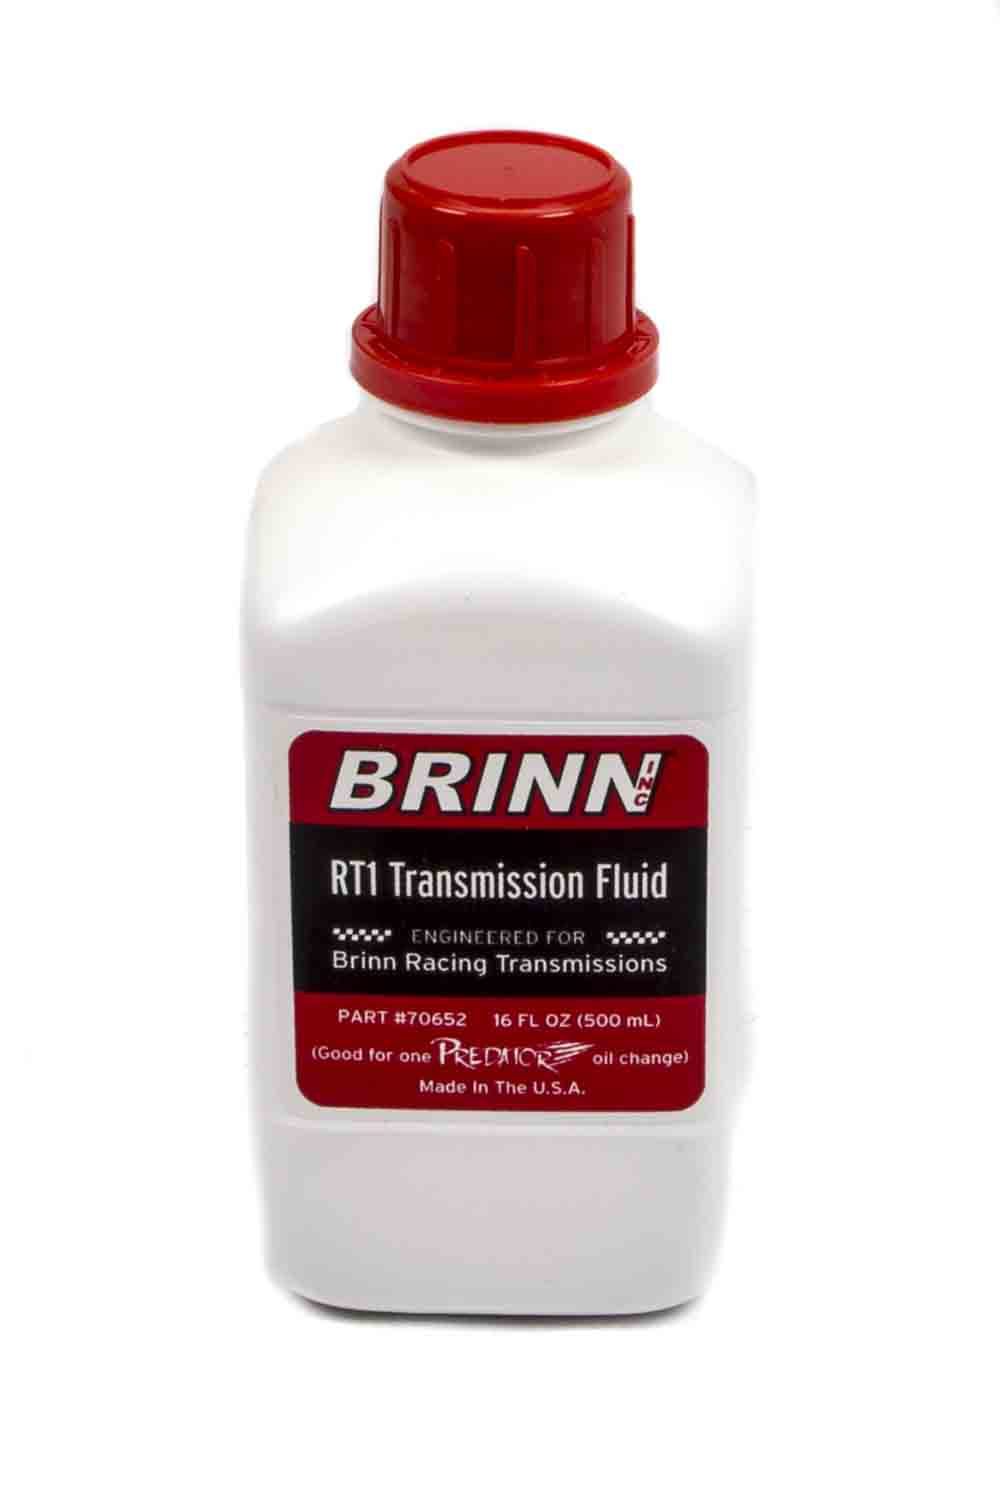 Brinn Transmission 70652 Transmission Fluid, RT1, Manual, 500 ml Bottle, Brinn Transmissions, Each